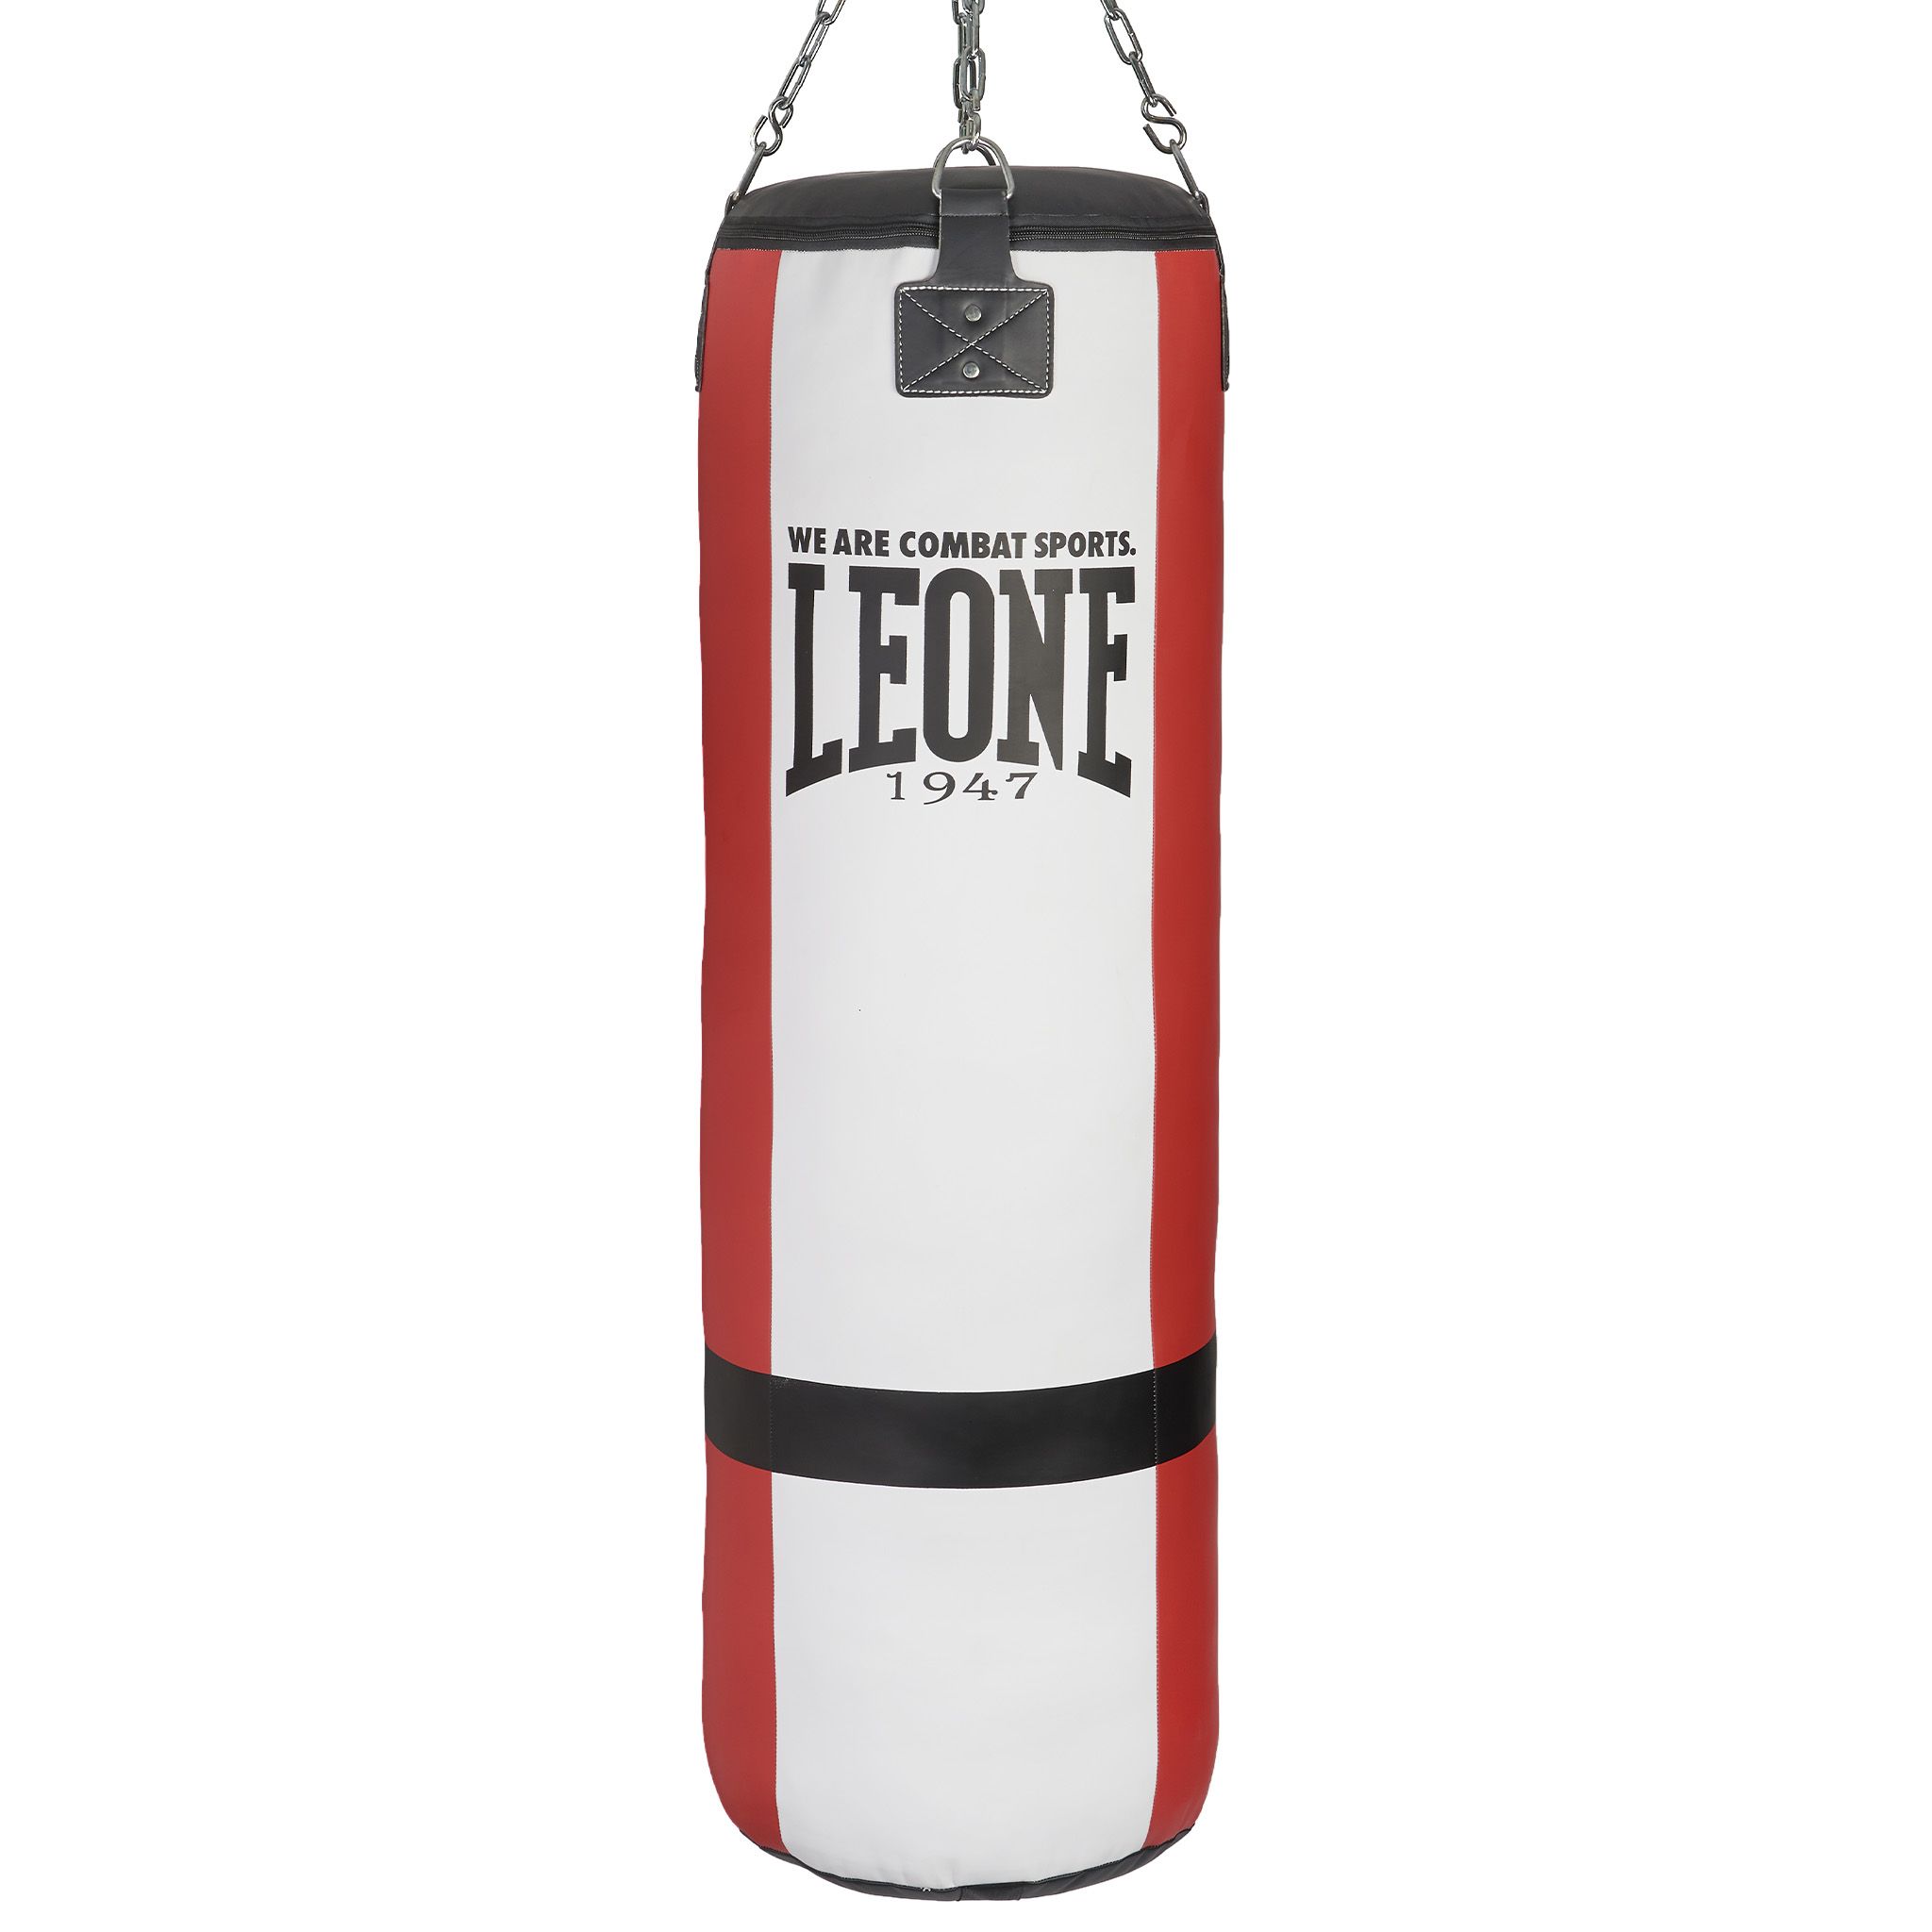 Saco de boxeo profesional relleno de 60 kg Leone 1947 "King Size" AT843.